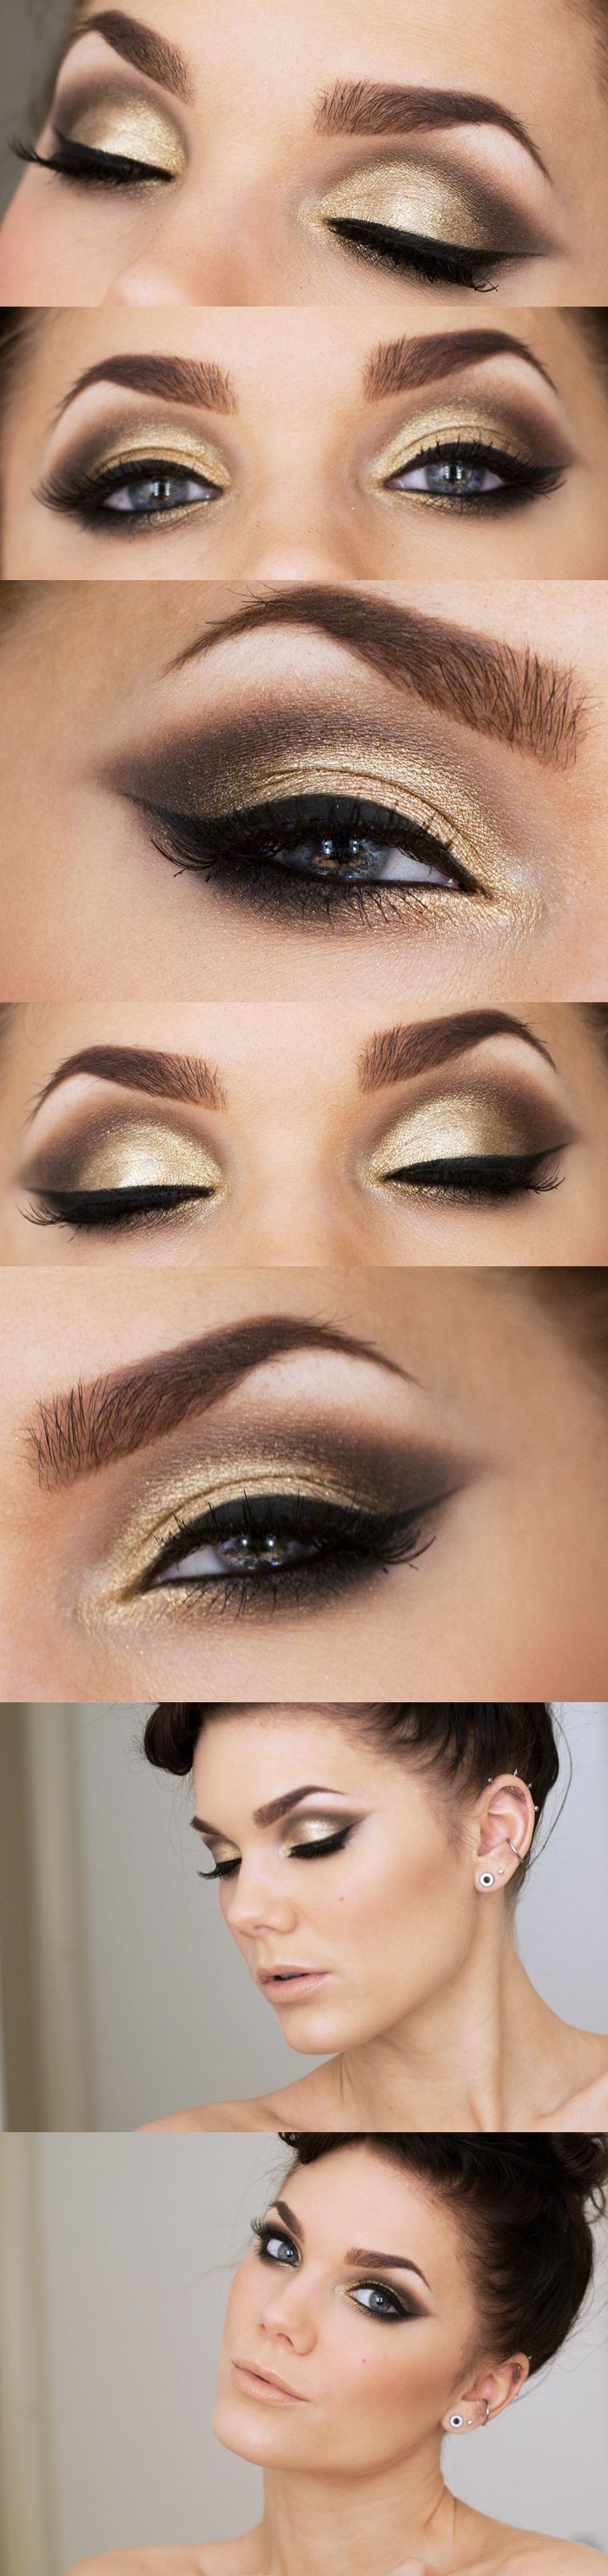 How To Create Smokey Eye Makeup Gold And Black Smokey Eye Tutorials Best Gold And Black Eye Shadow